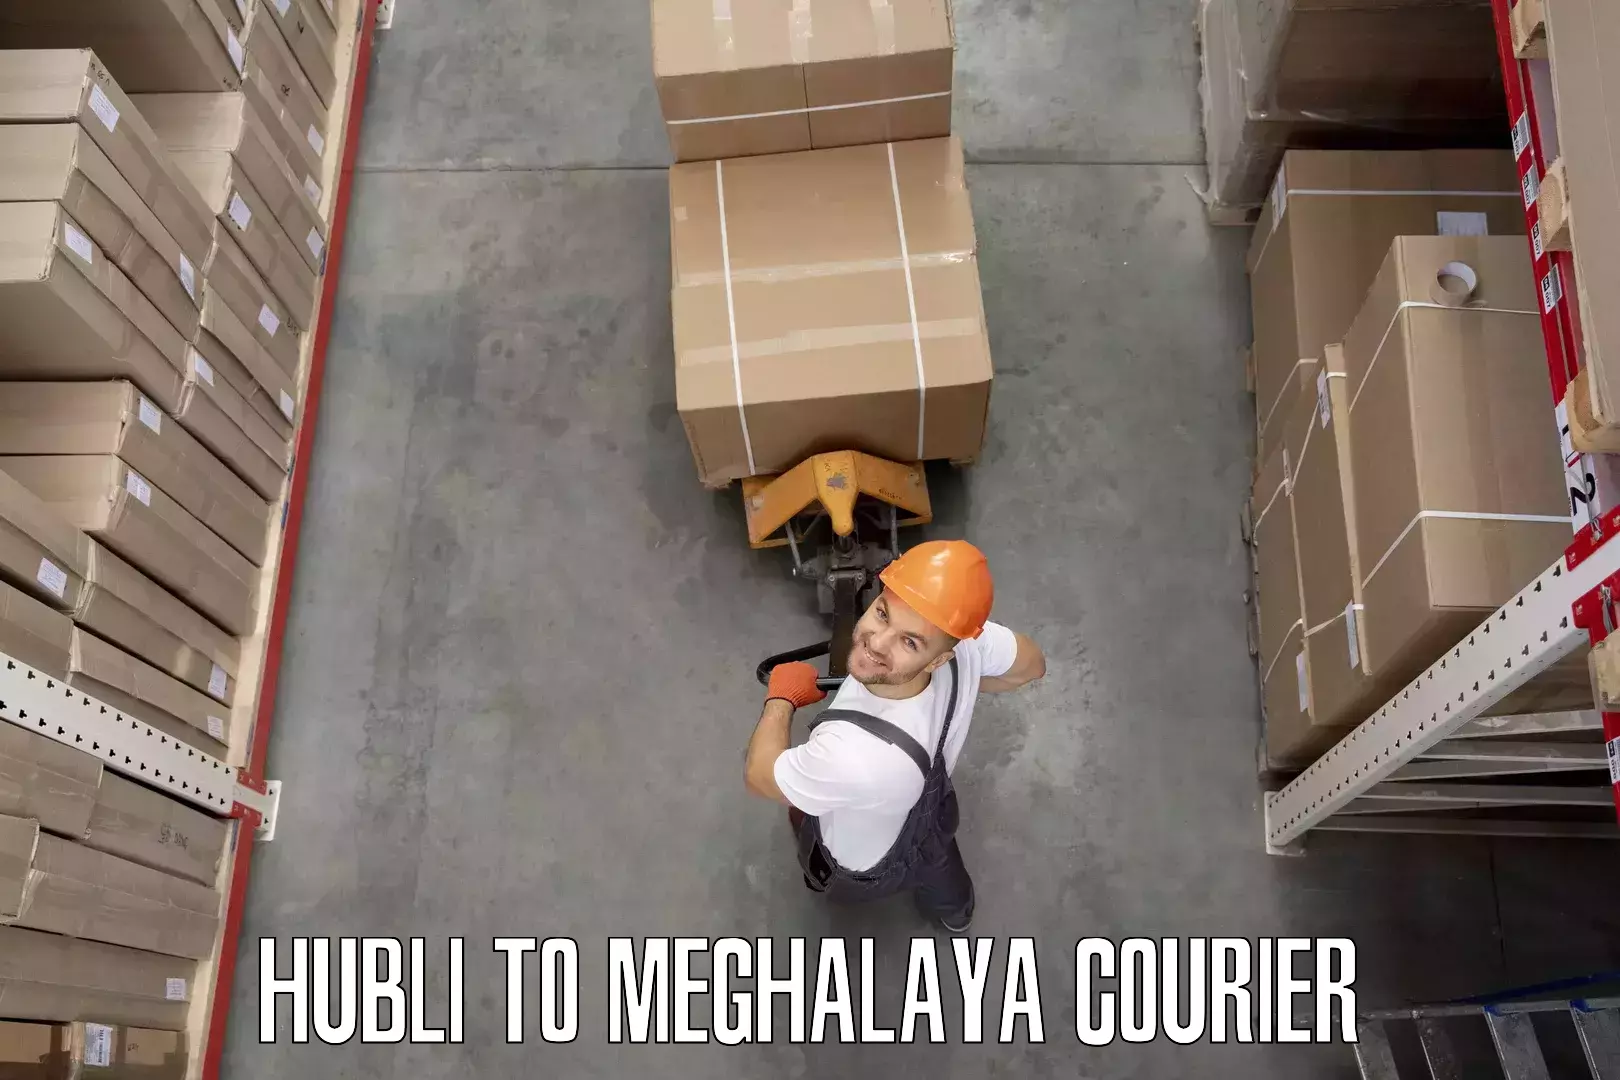 Efficient moving company Hubli to Meghalaya